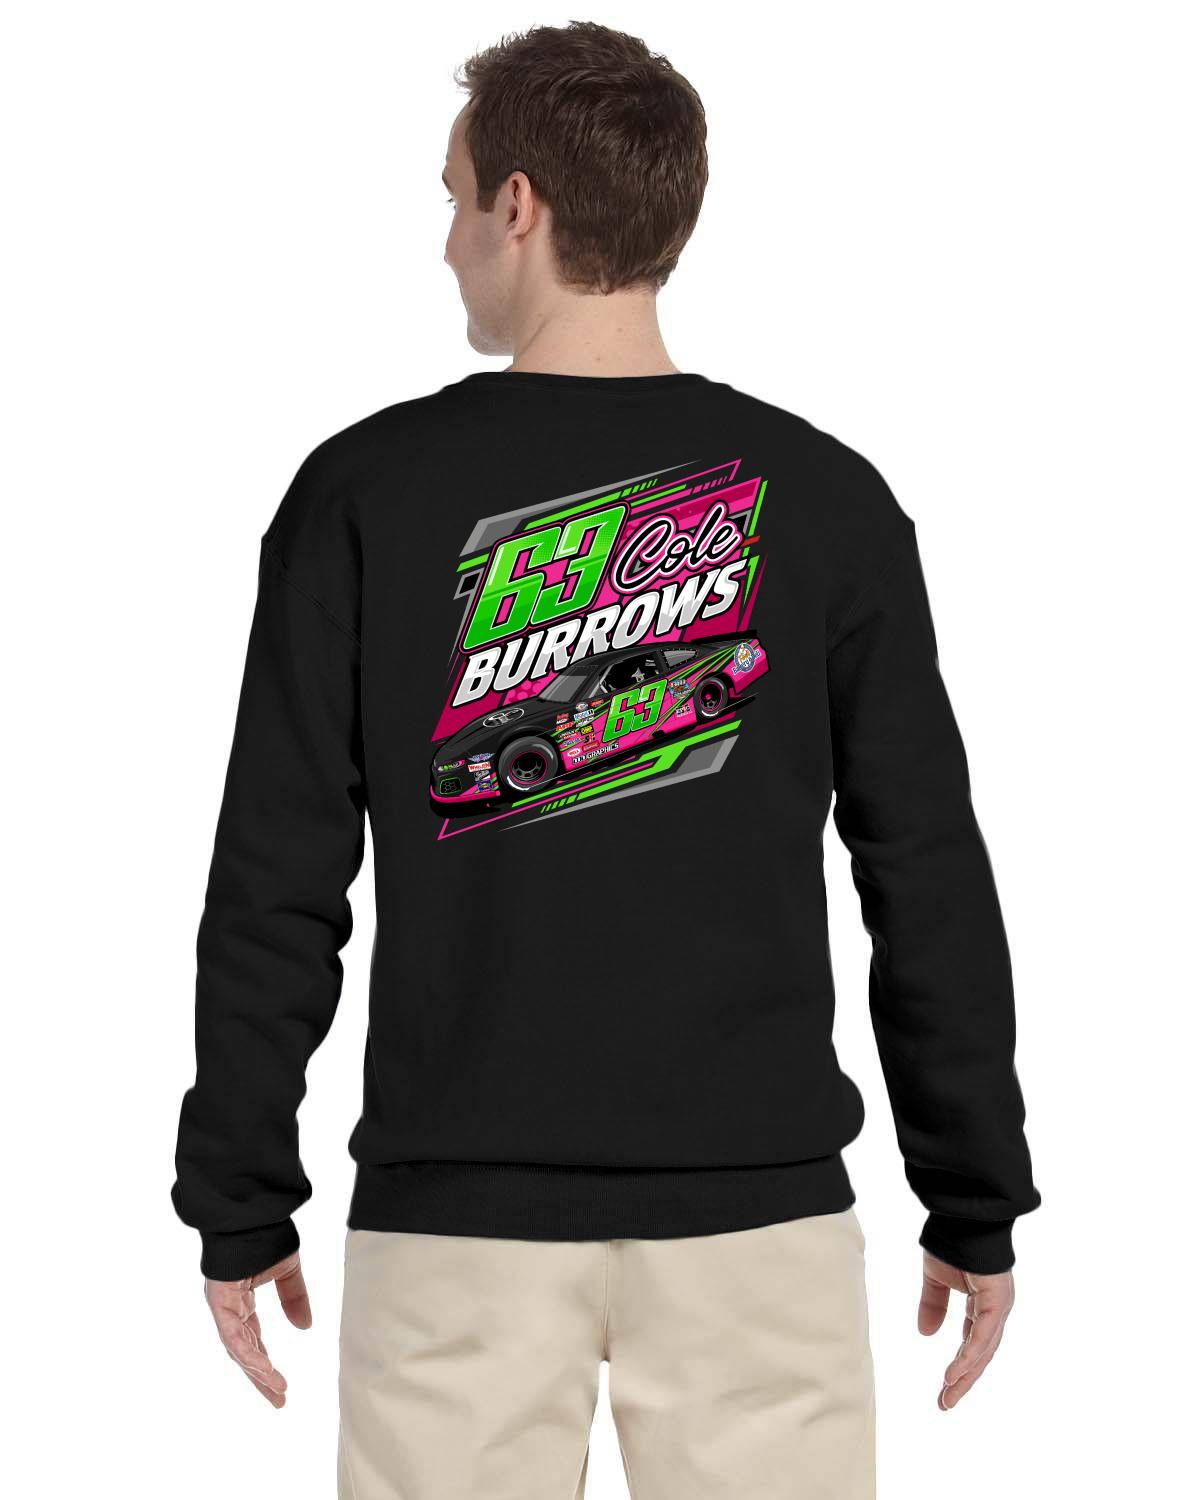 Cole Burrows Racing Crew neck sweater